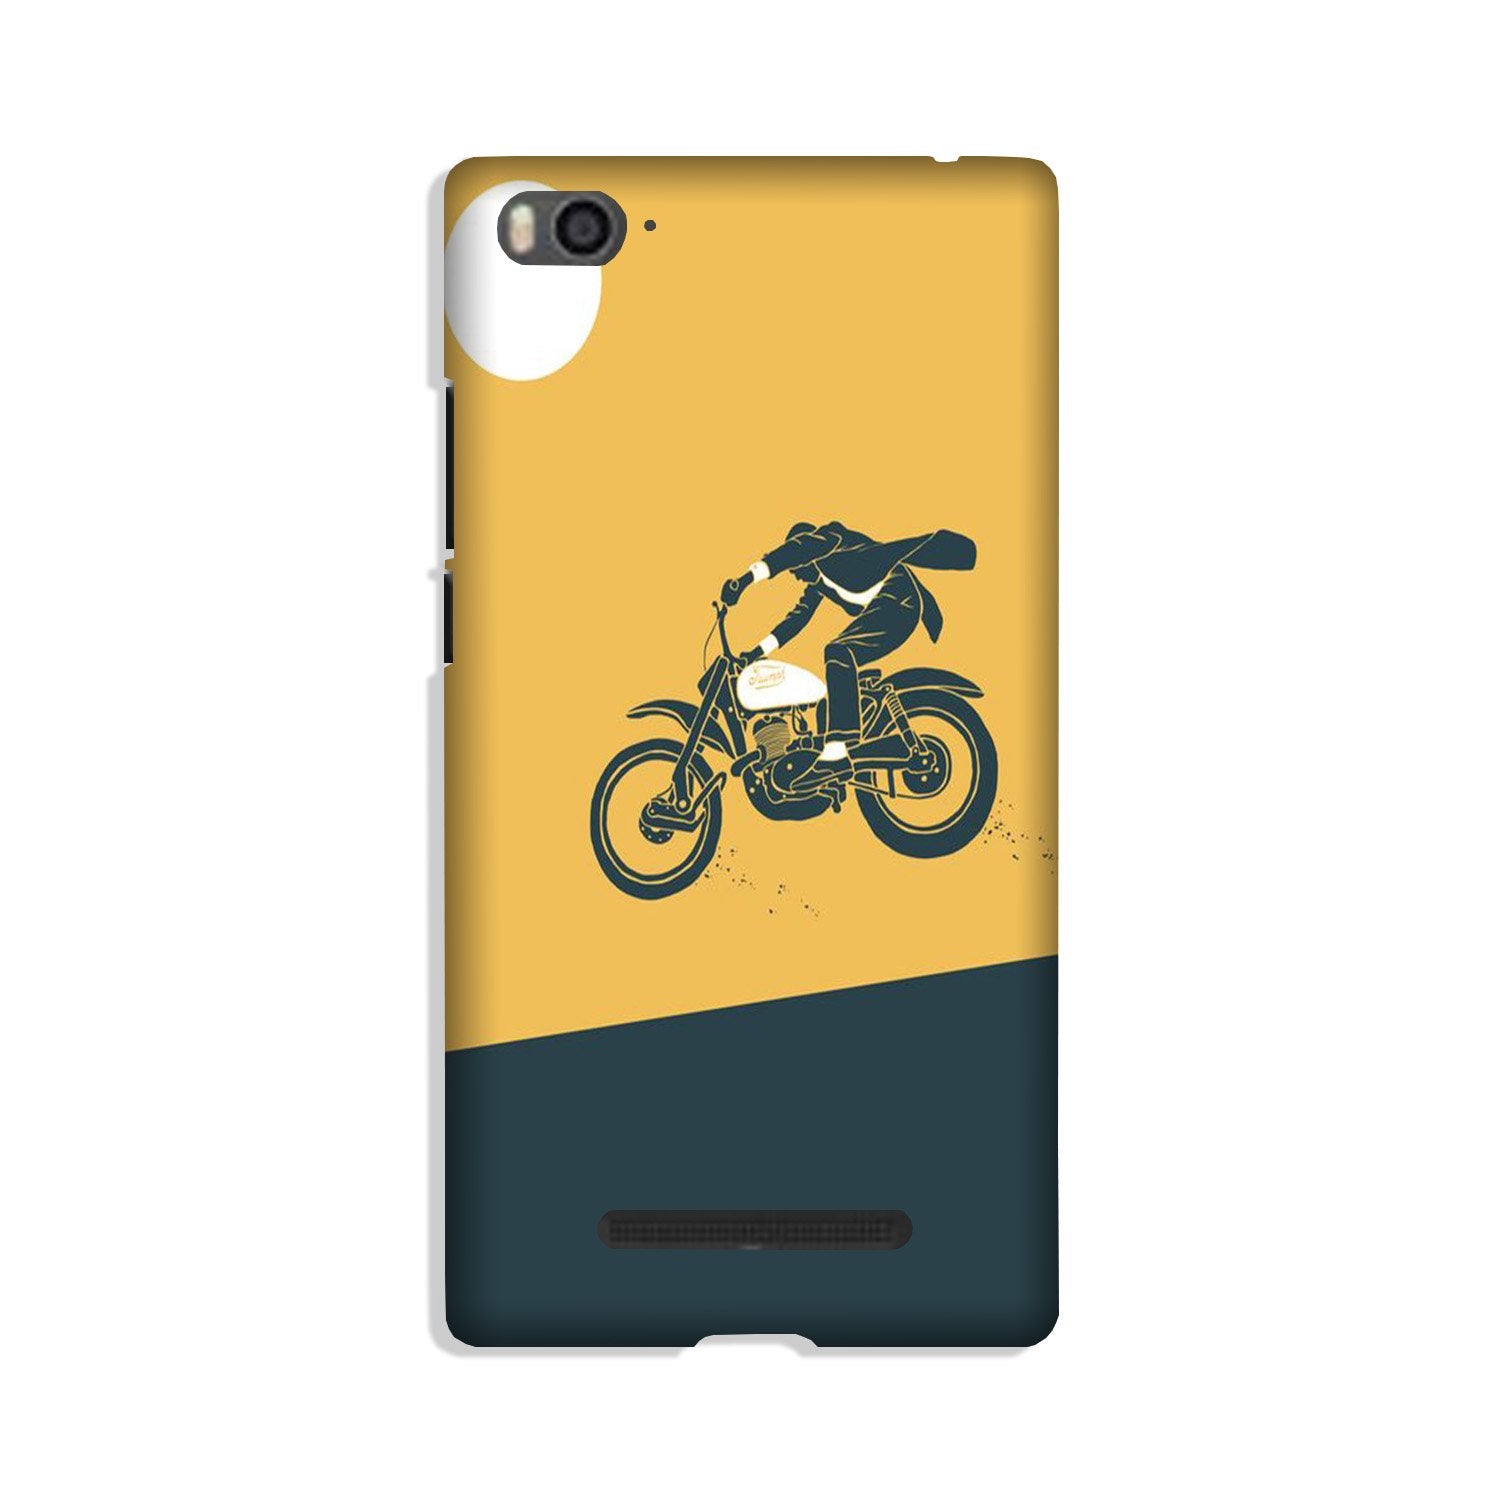 Bike Lovers Case for Xiaomi Mi 4i (Design No. 256)